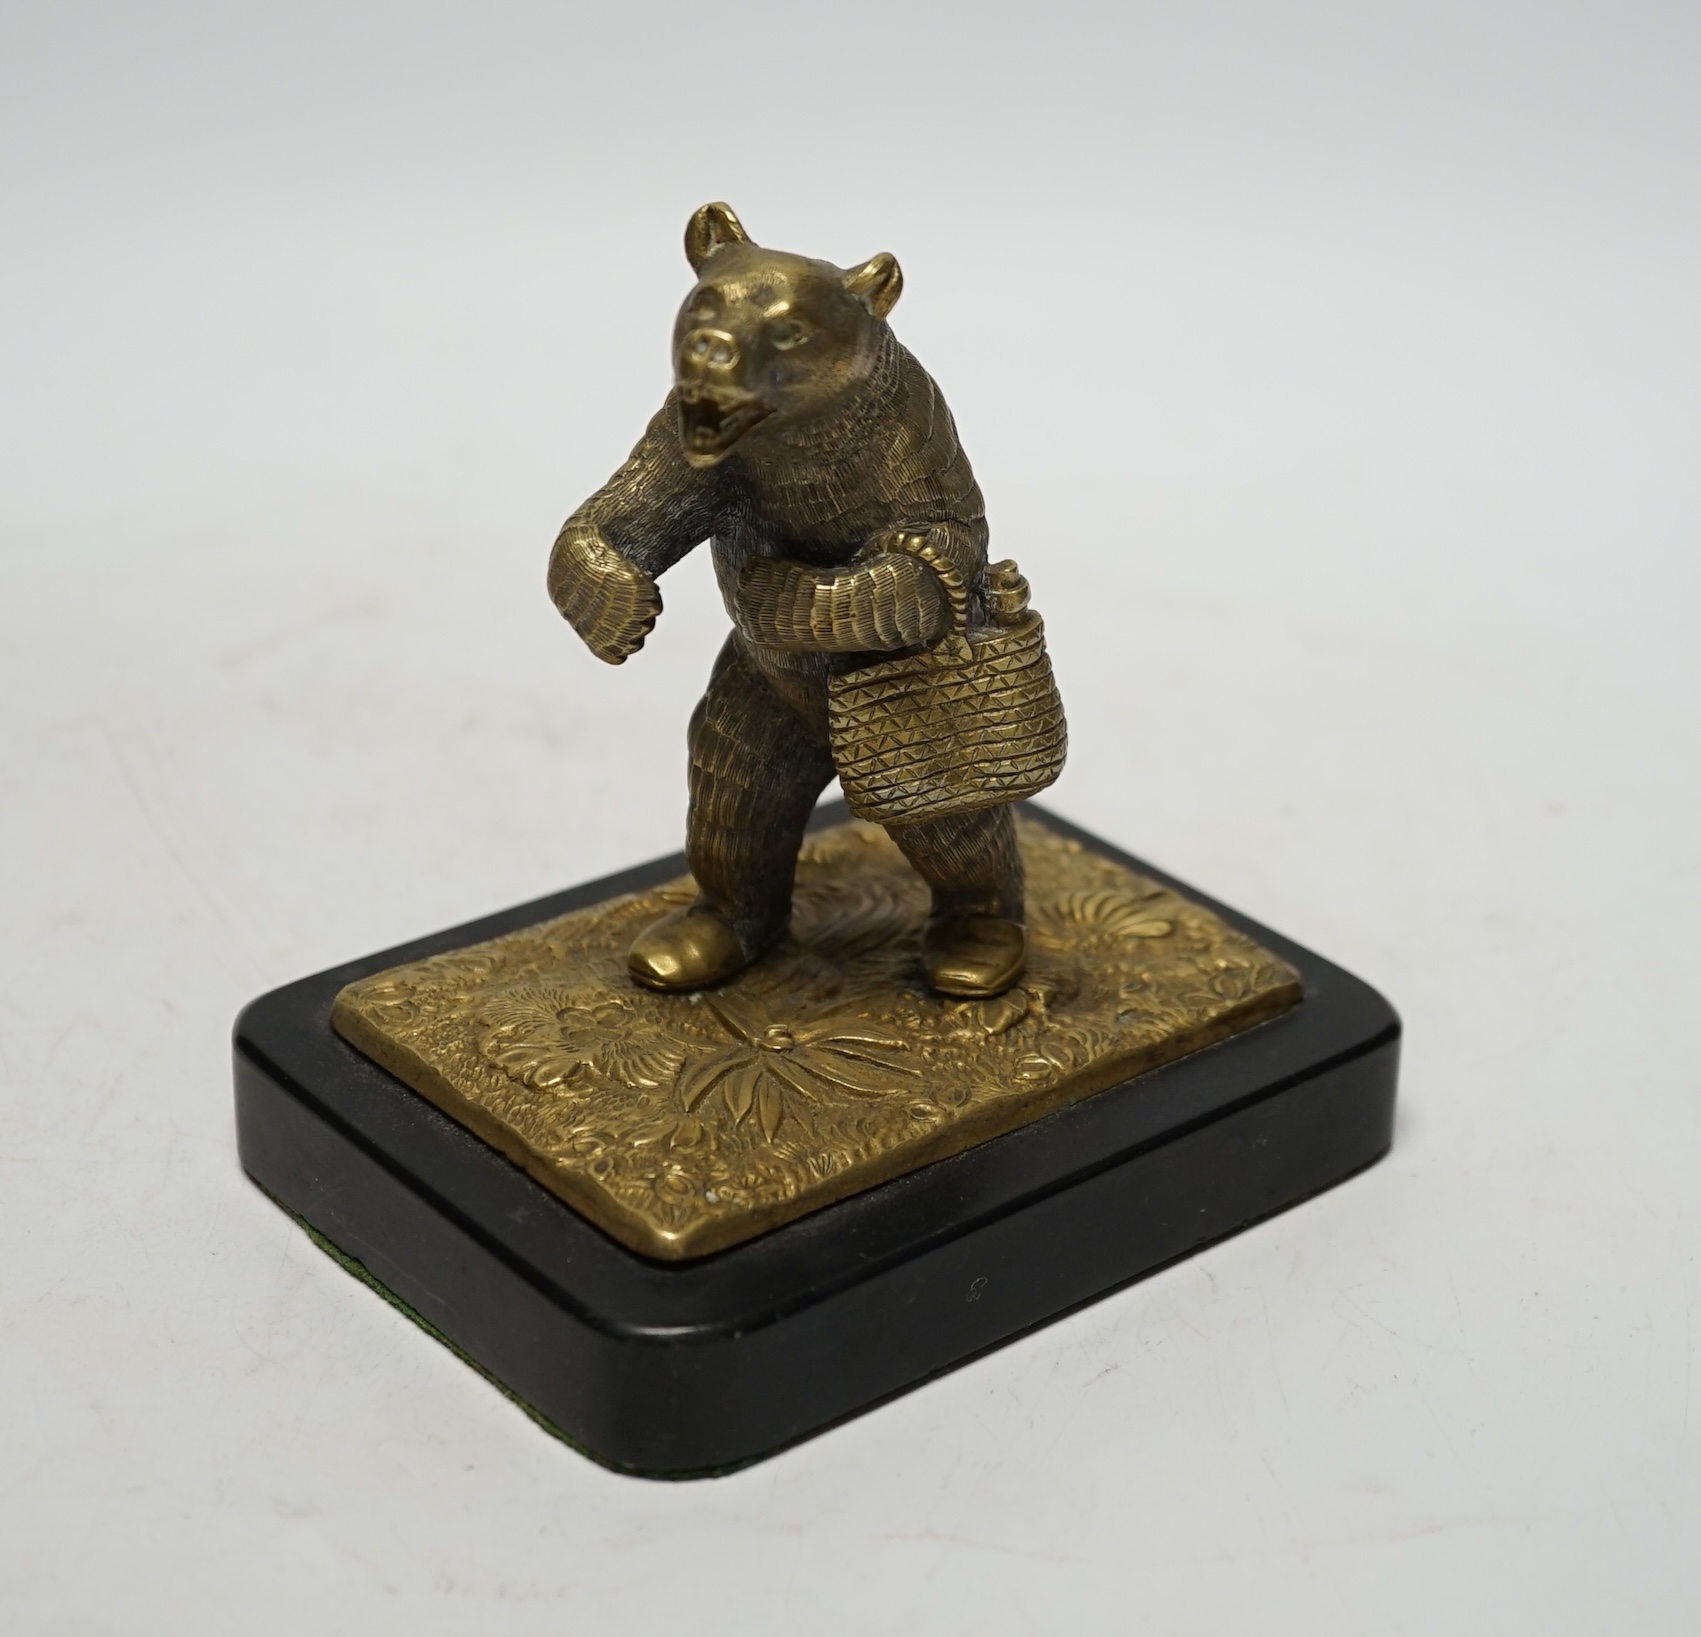 A novelty bronze bear paperweight on stand, 12.5cm high